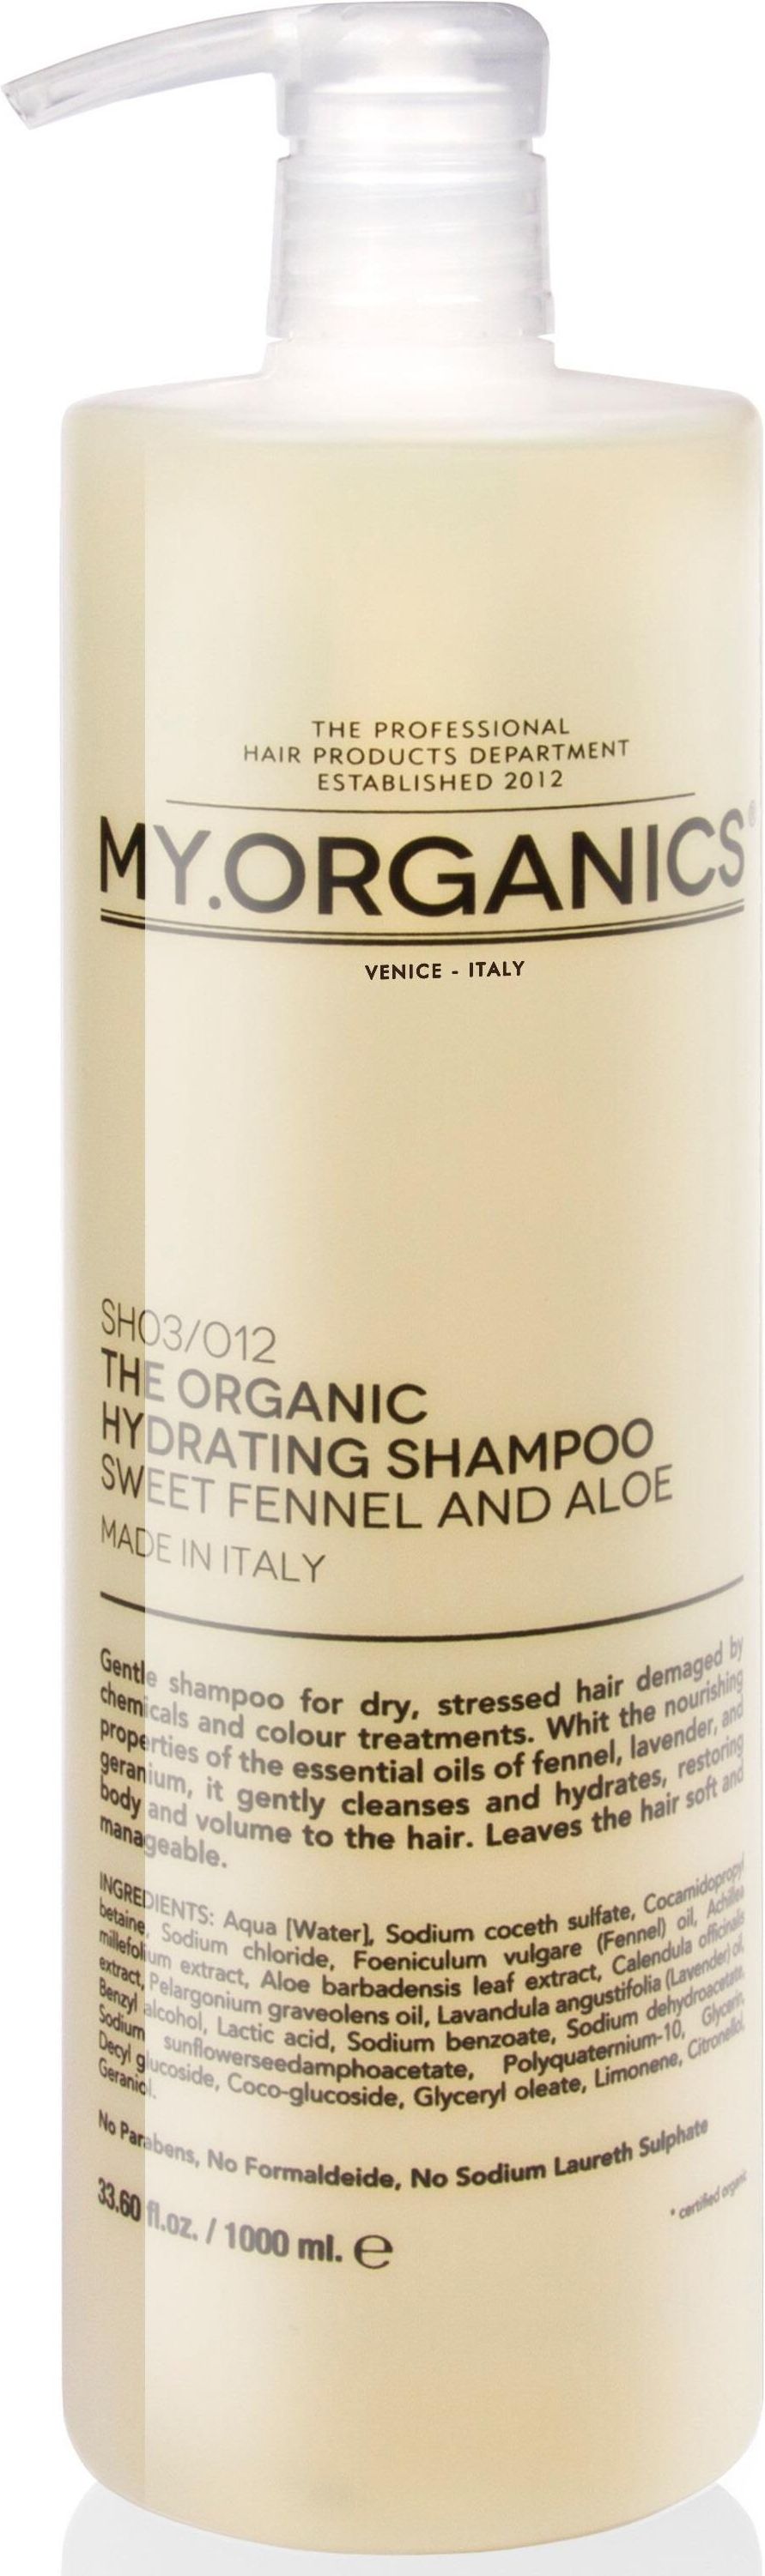 my organics szampon